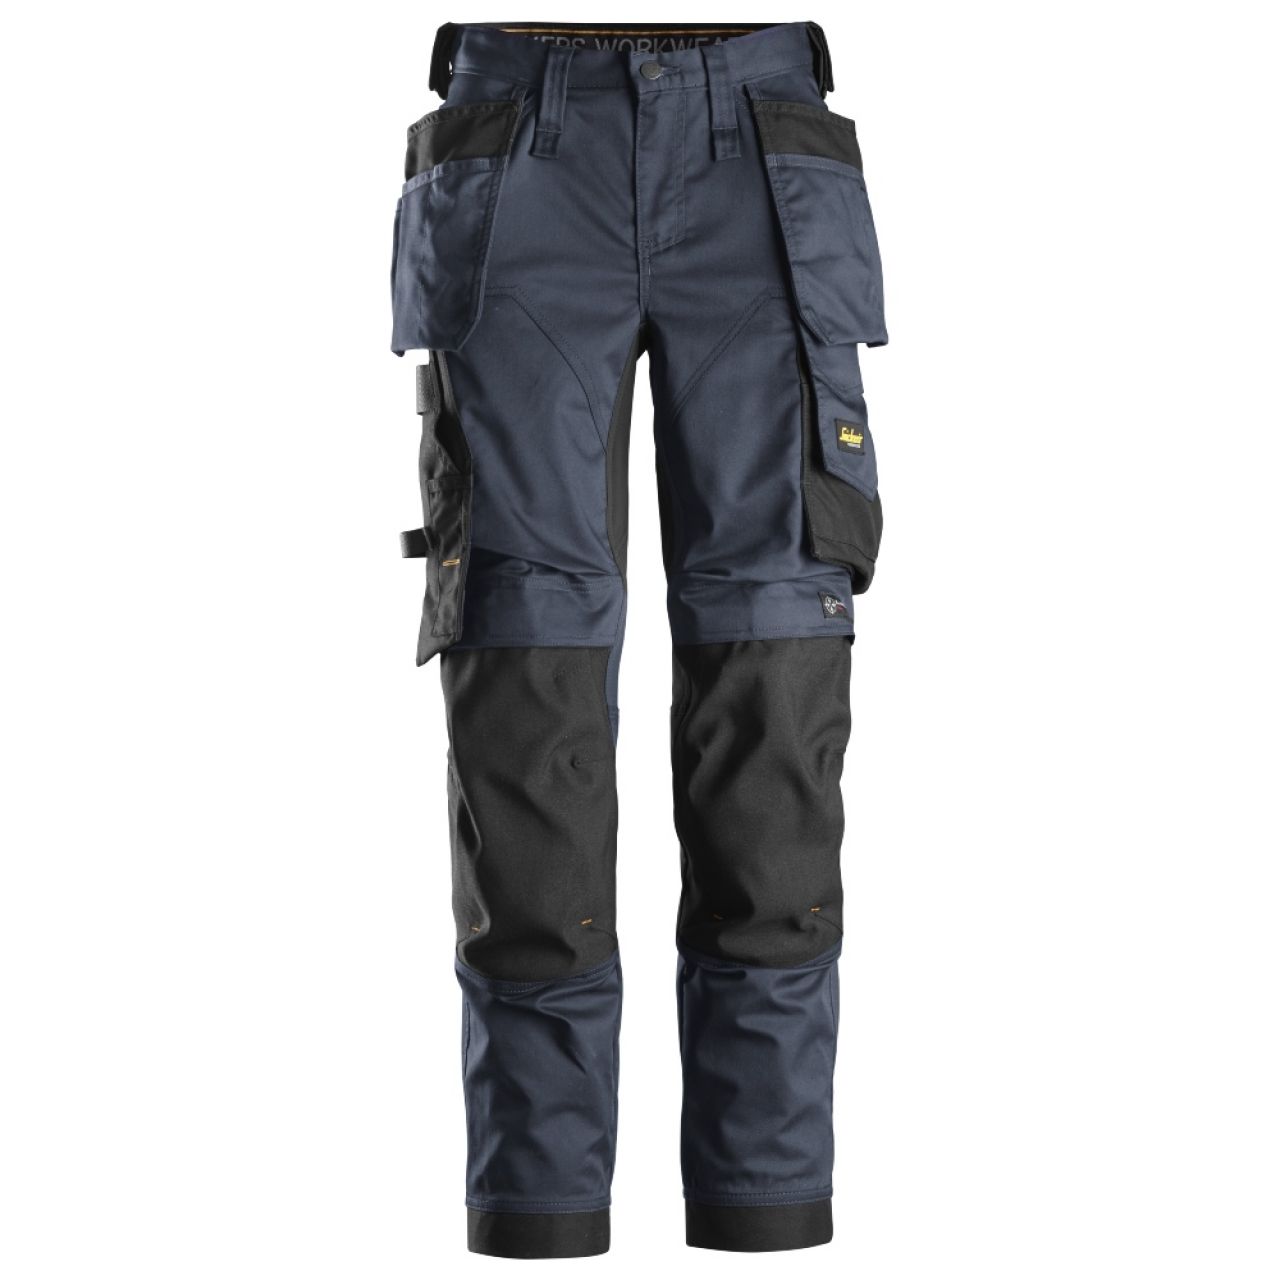 6247 Pantalones largos de trabajo elásticos para mujer con bolsillos flotantes AllroundWork azul marino-negro talla 50